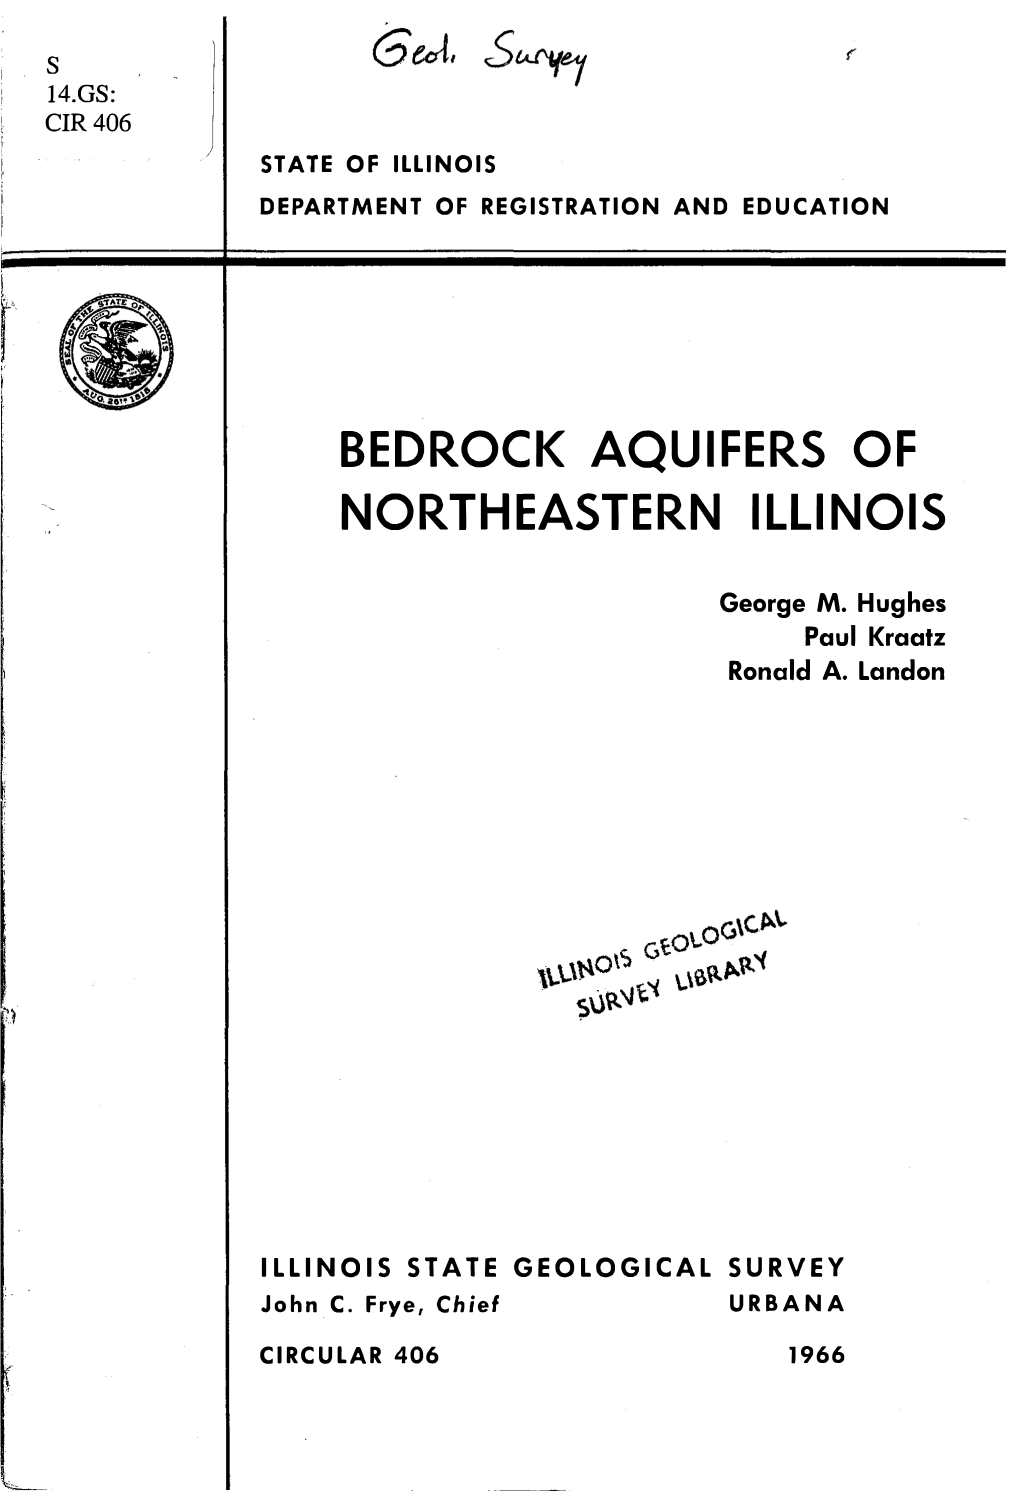 Bedrock Aquifers of Northeastern Illinois